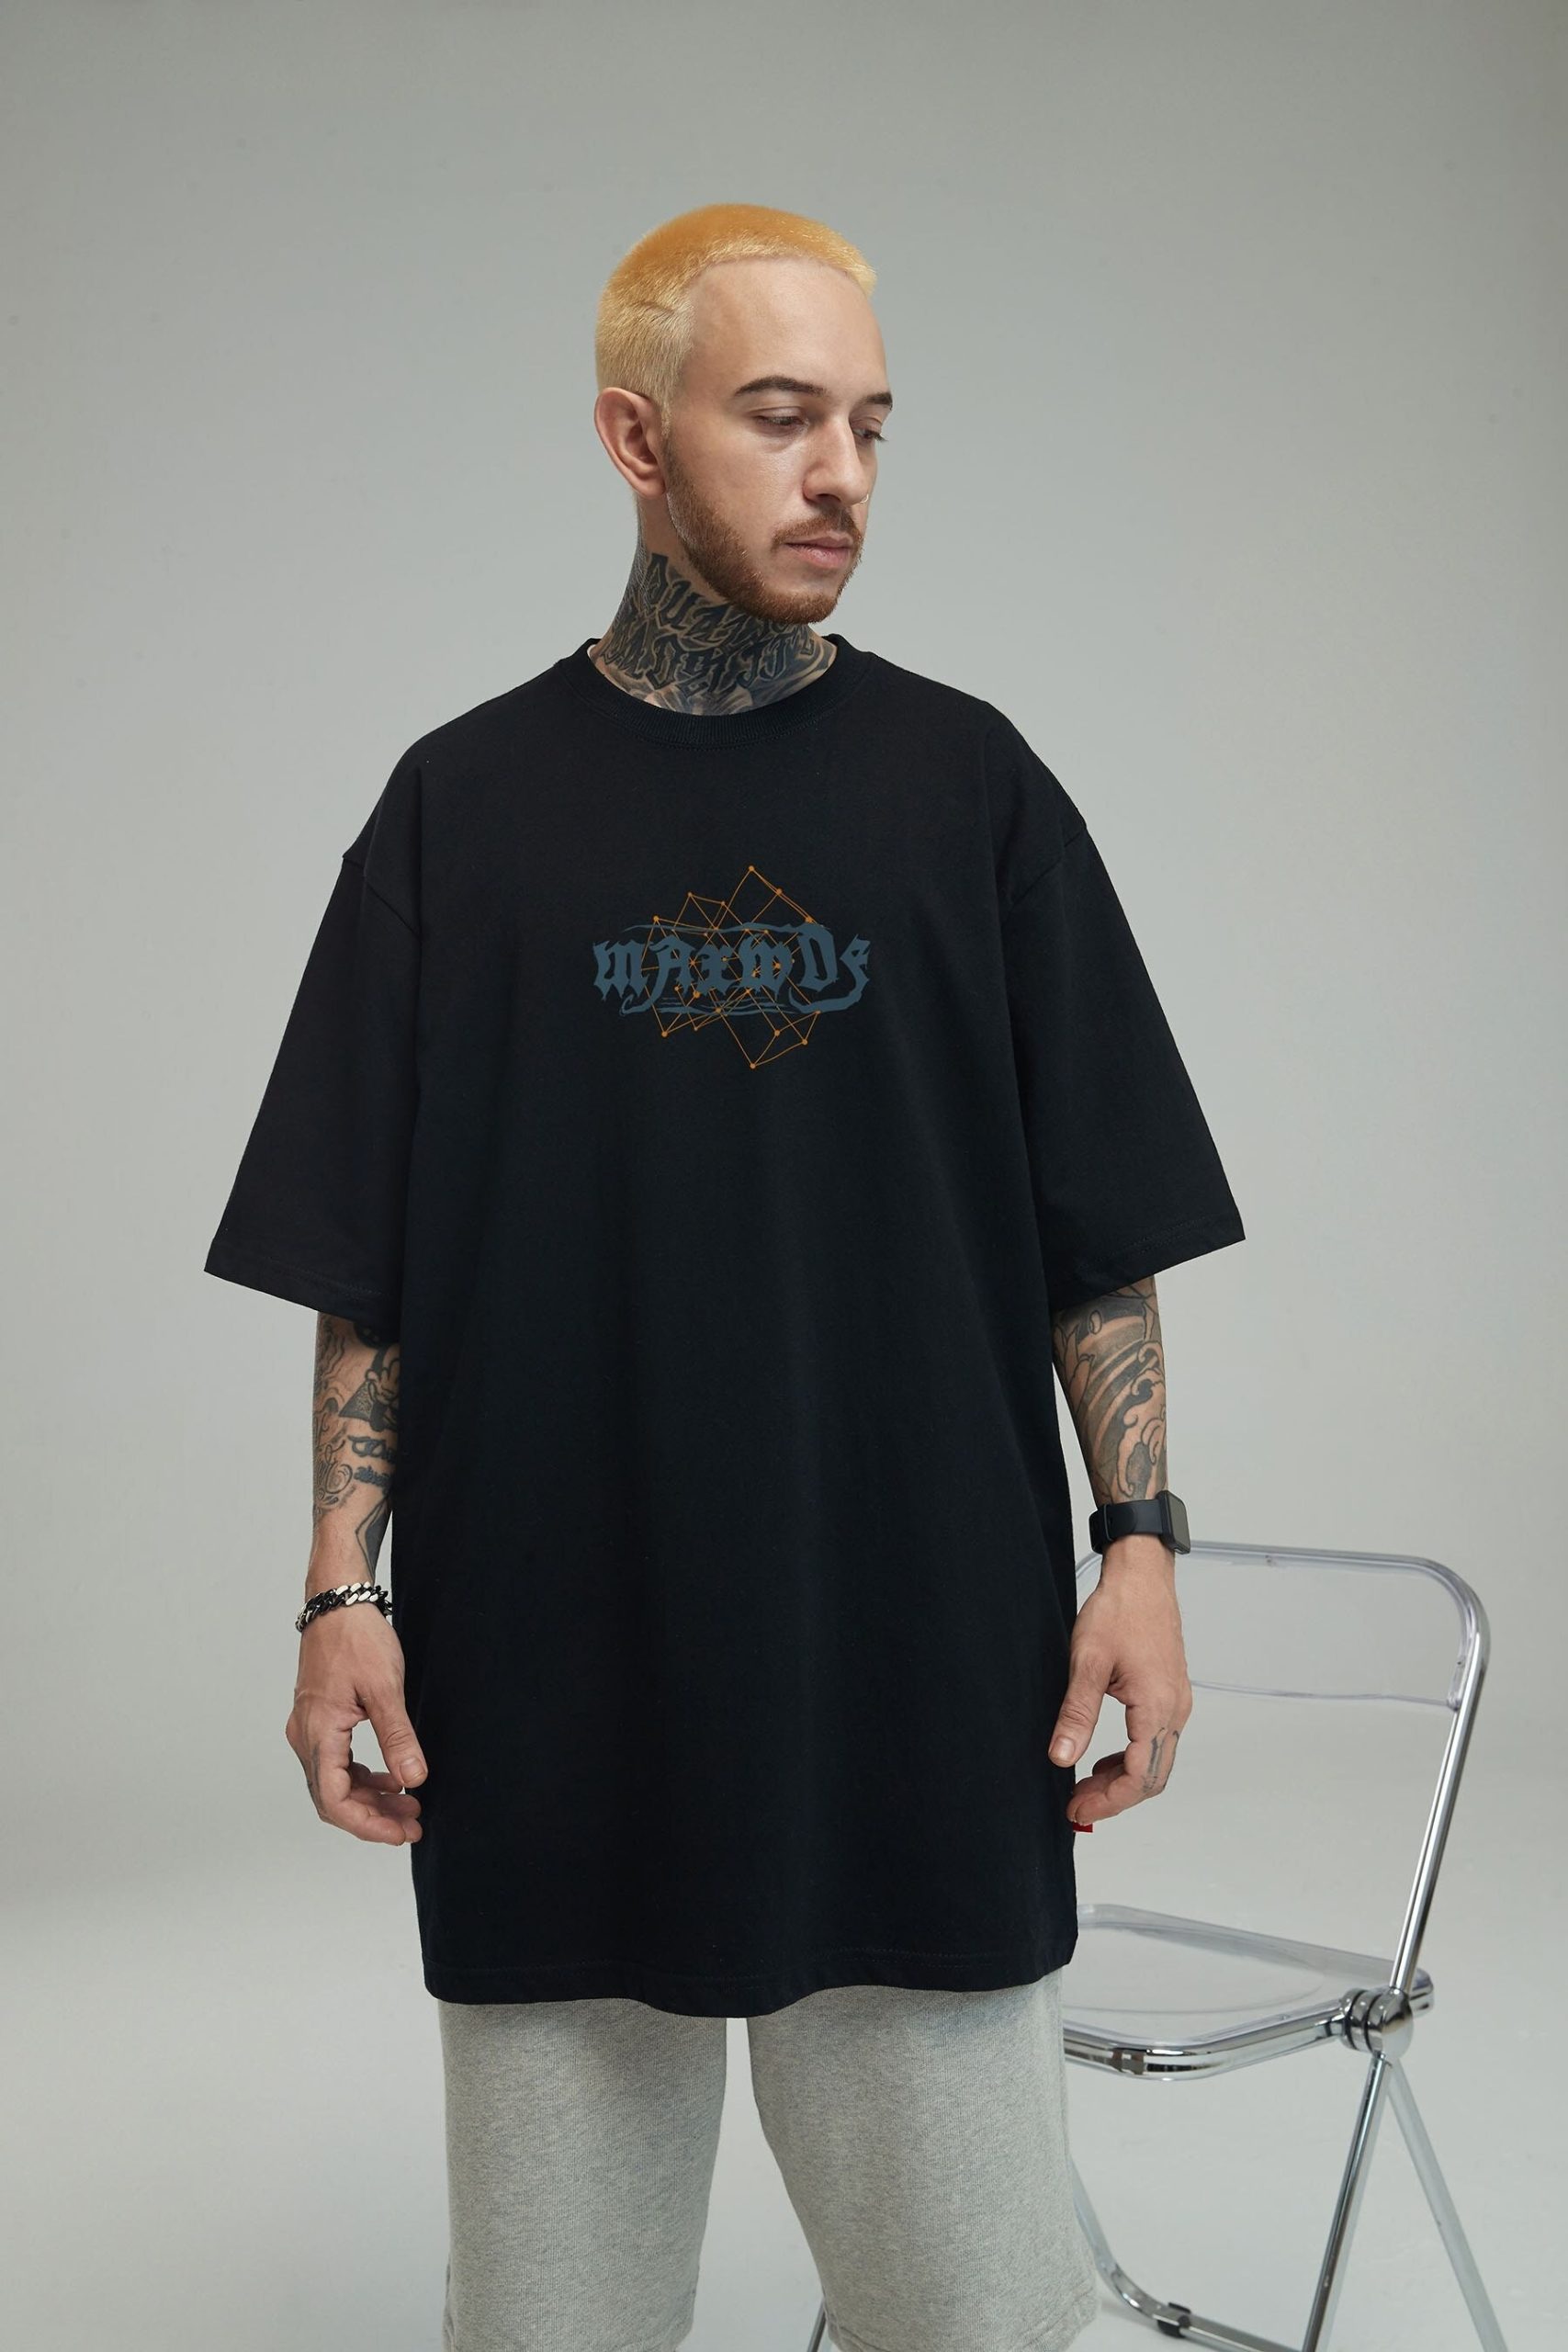 Summer Eye Of Providence Graphic T Shirt For Men Streetwear Fashion Black Short Sleeves Tees